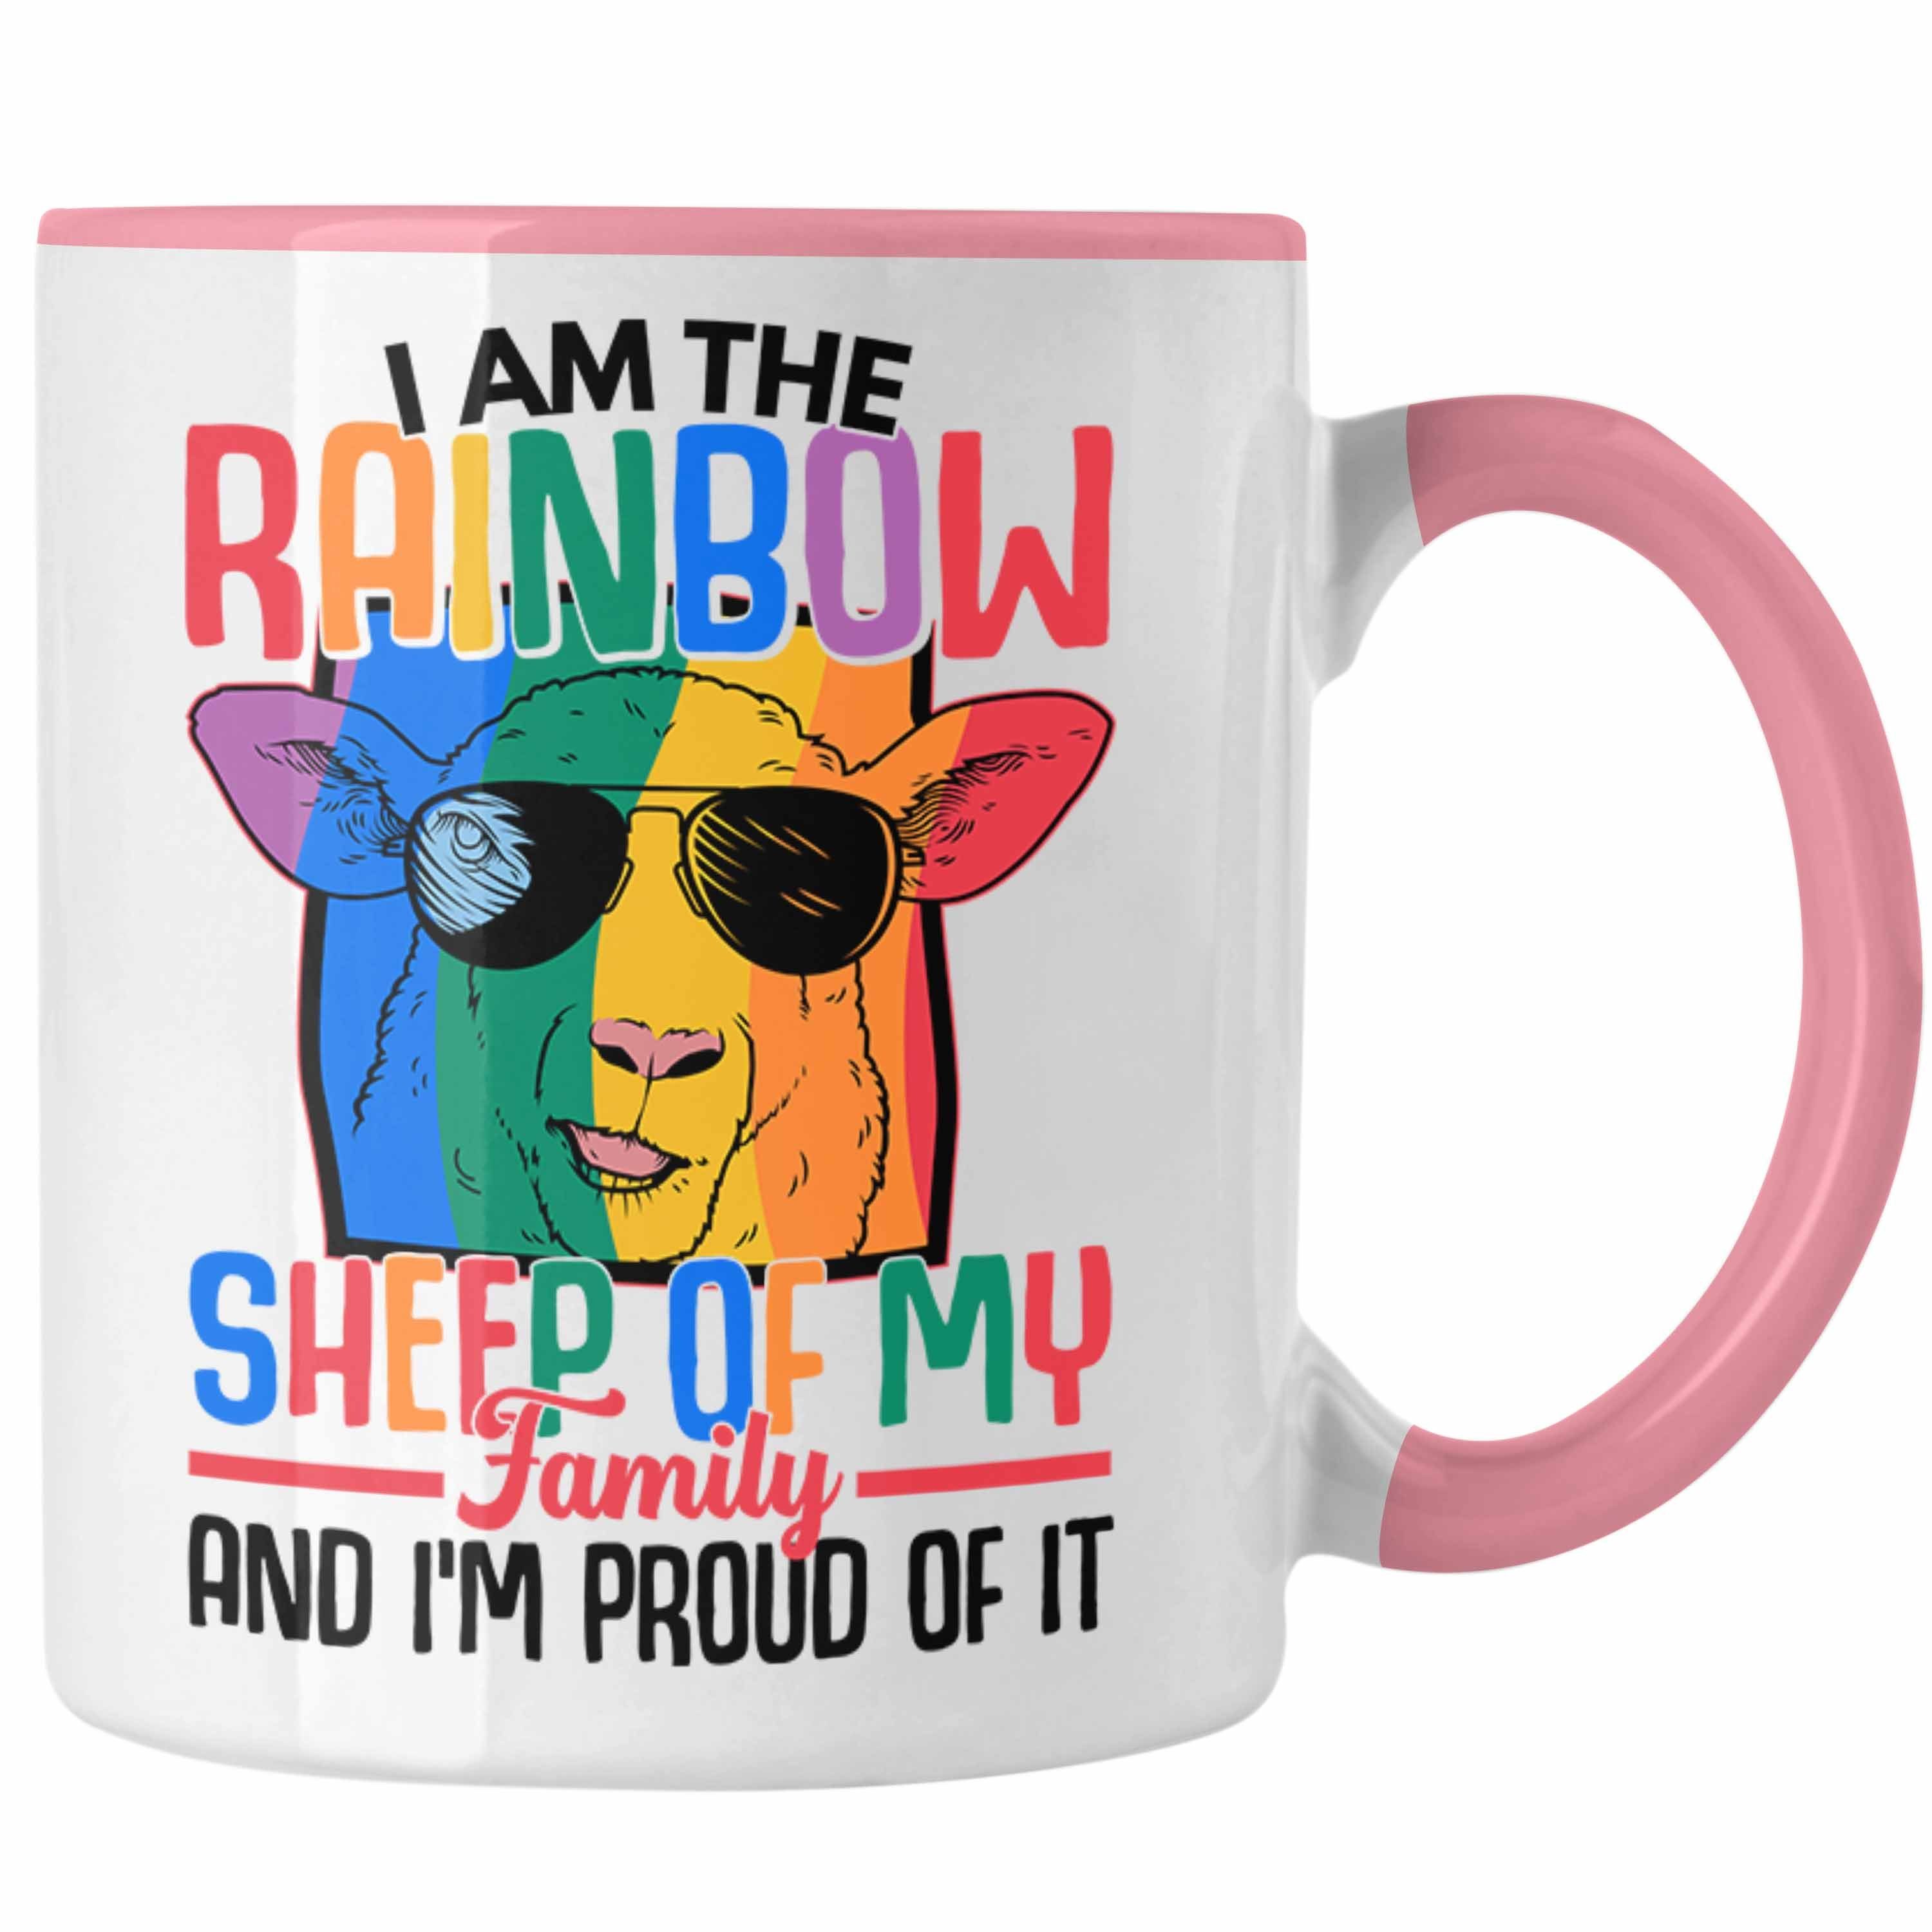 Trendation Tasse Trendation - LGBT Tasse Geschenk für Schwule Lesben Transgender Regenbogen Lustige Grafik Regenbogen Schaaf In Der Familie Rosa